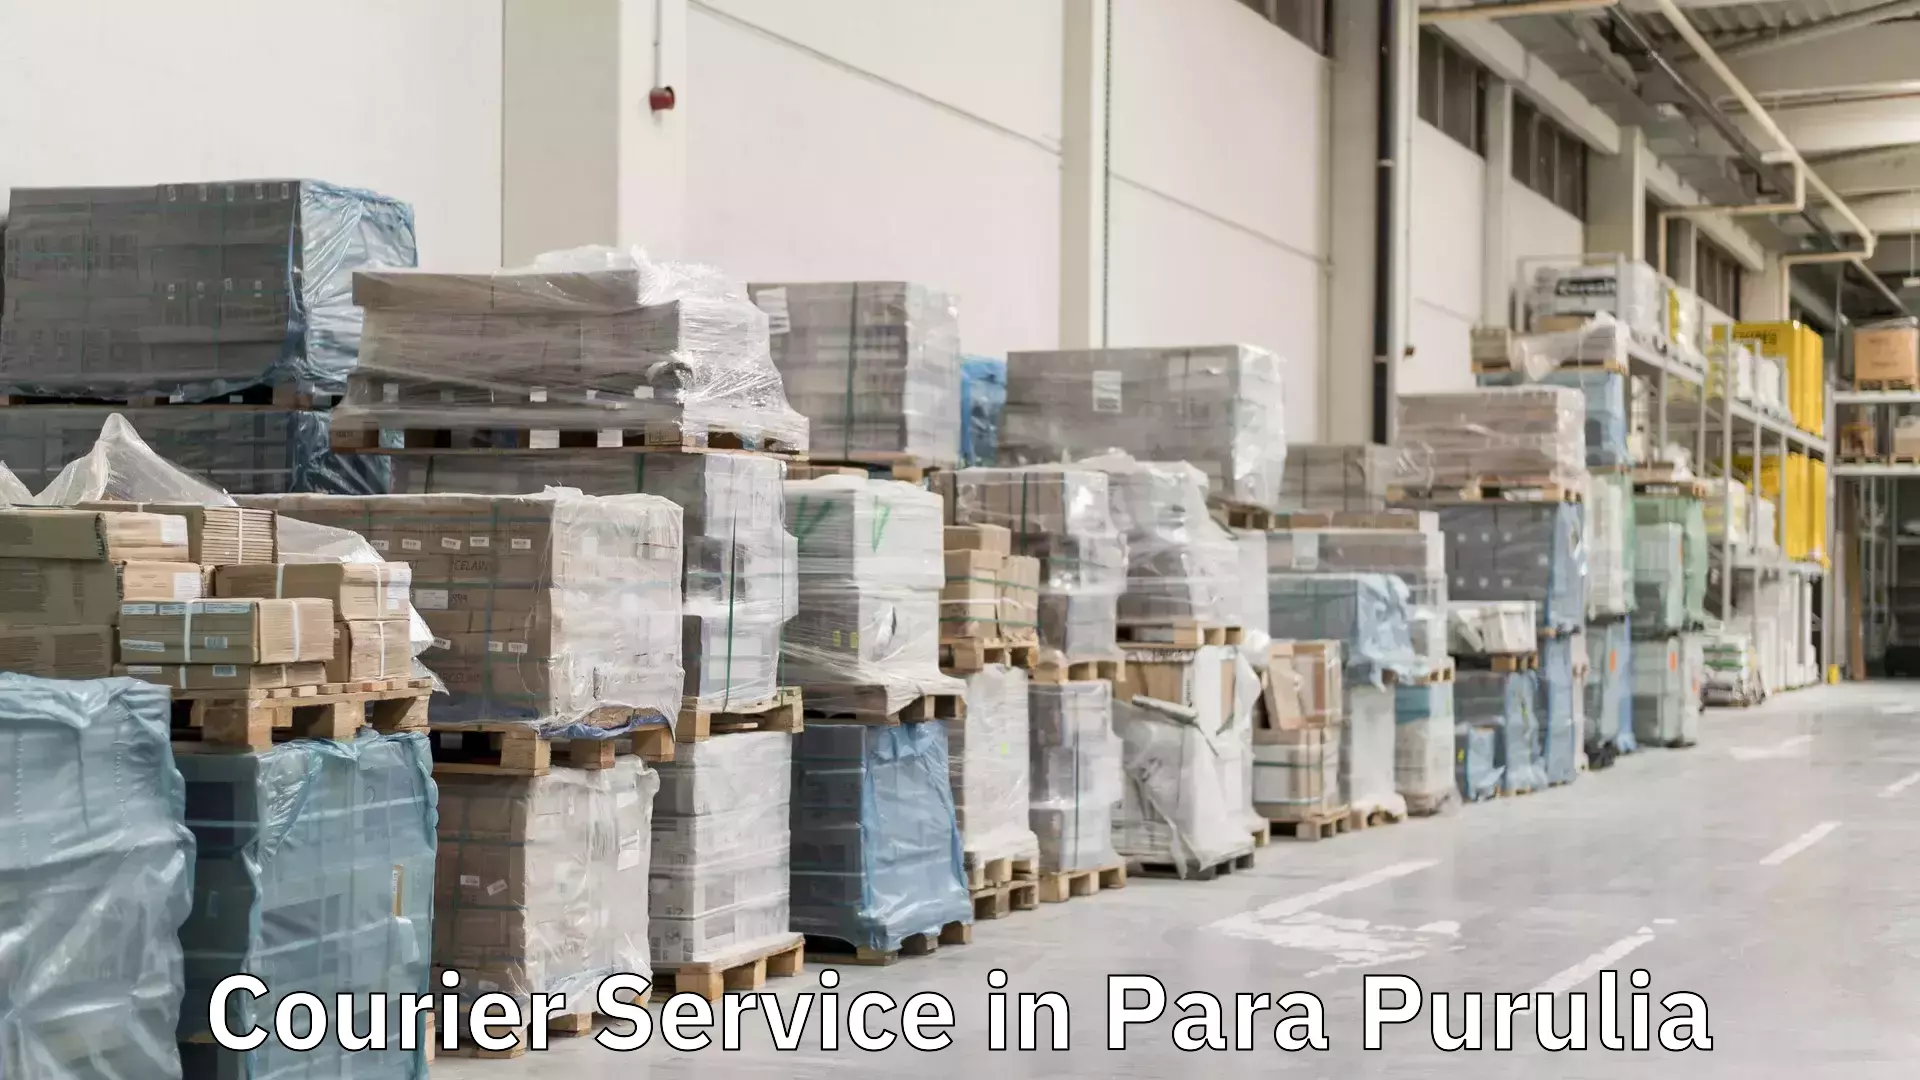 Comprehensive parcel tracking in Para Purulia